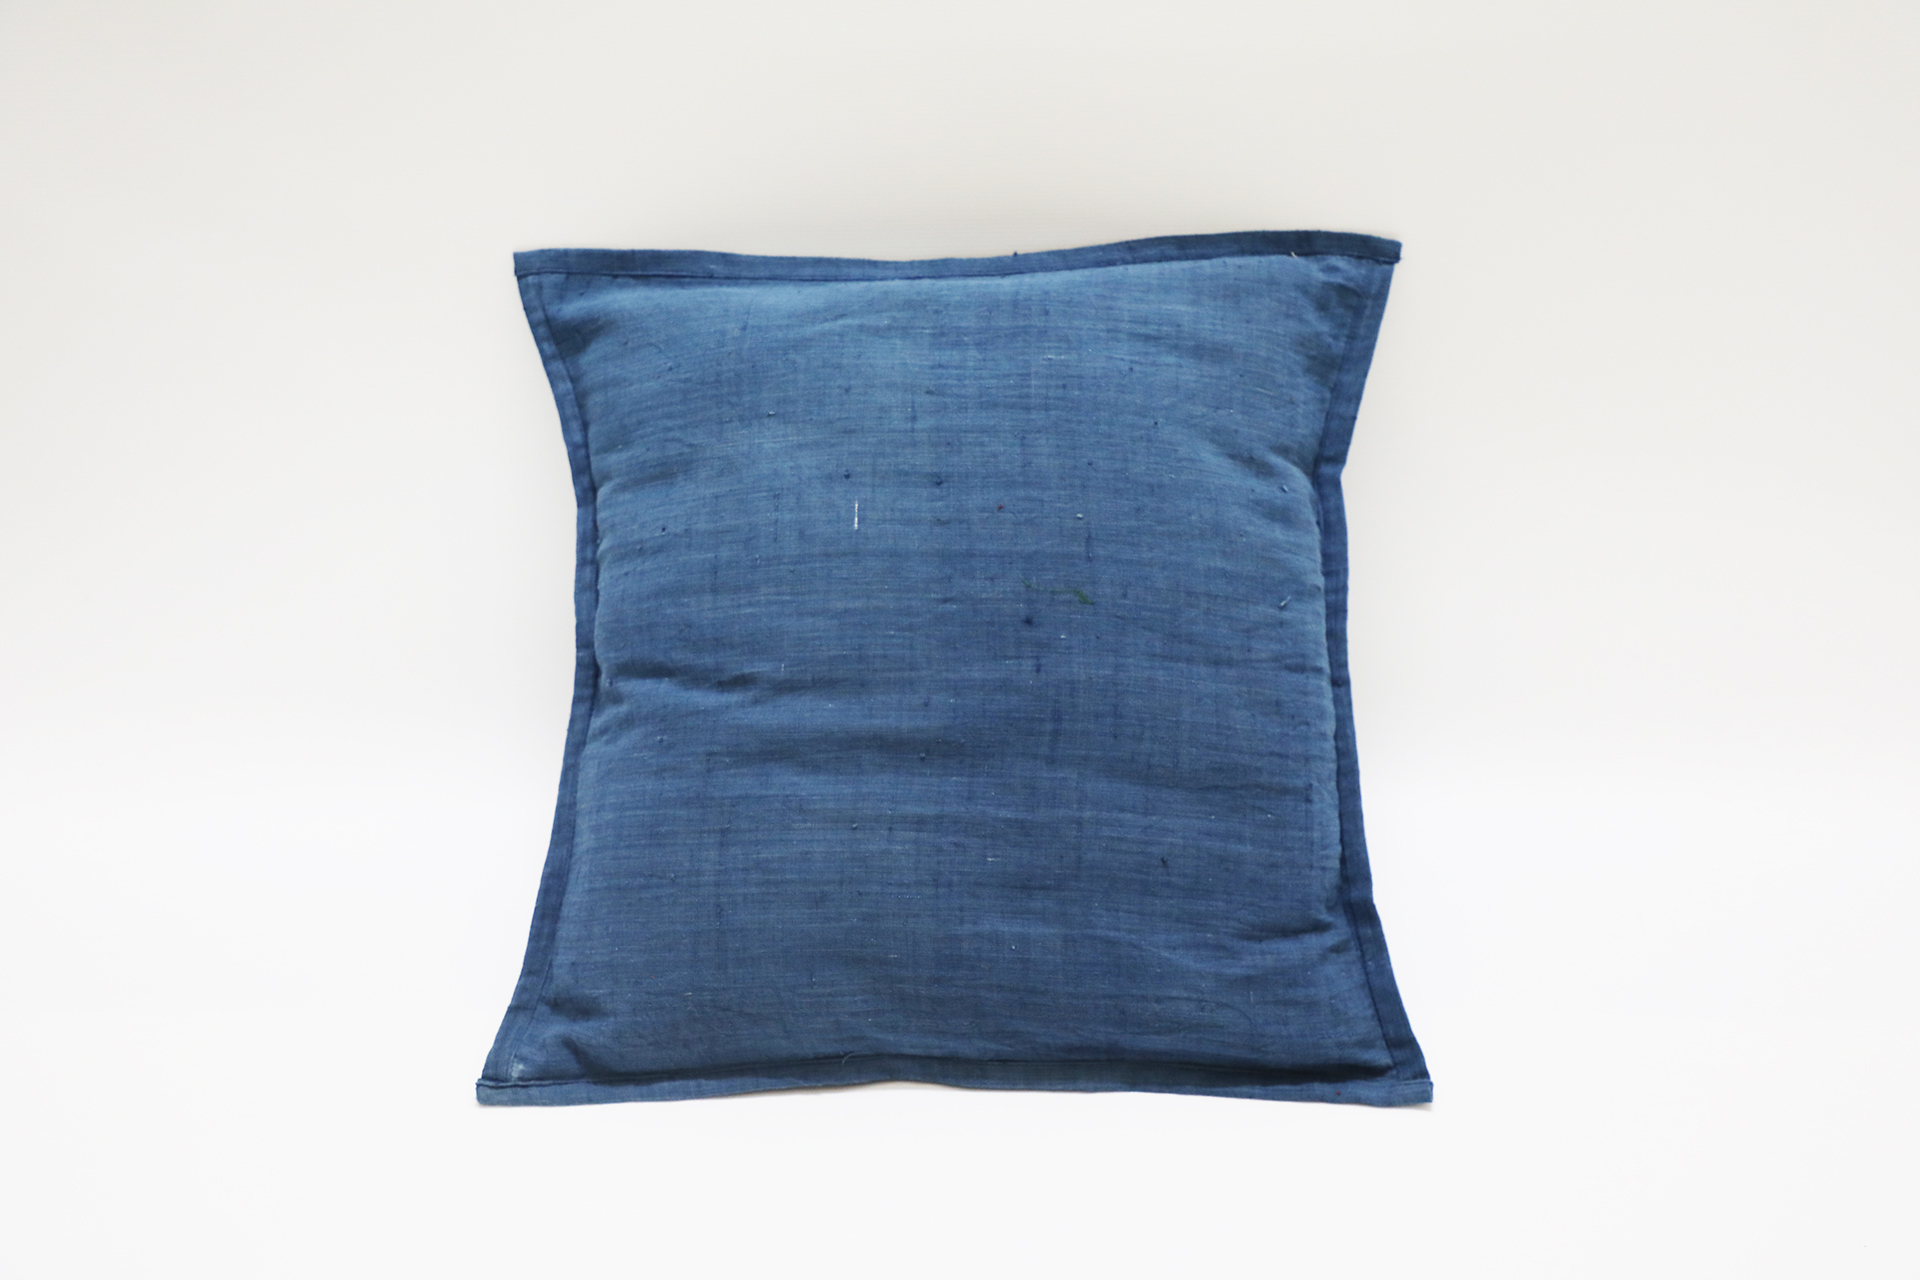 Indigo Blue Cushion Cover 16 X 16 inch • Vritti Designs